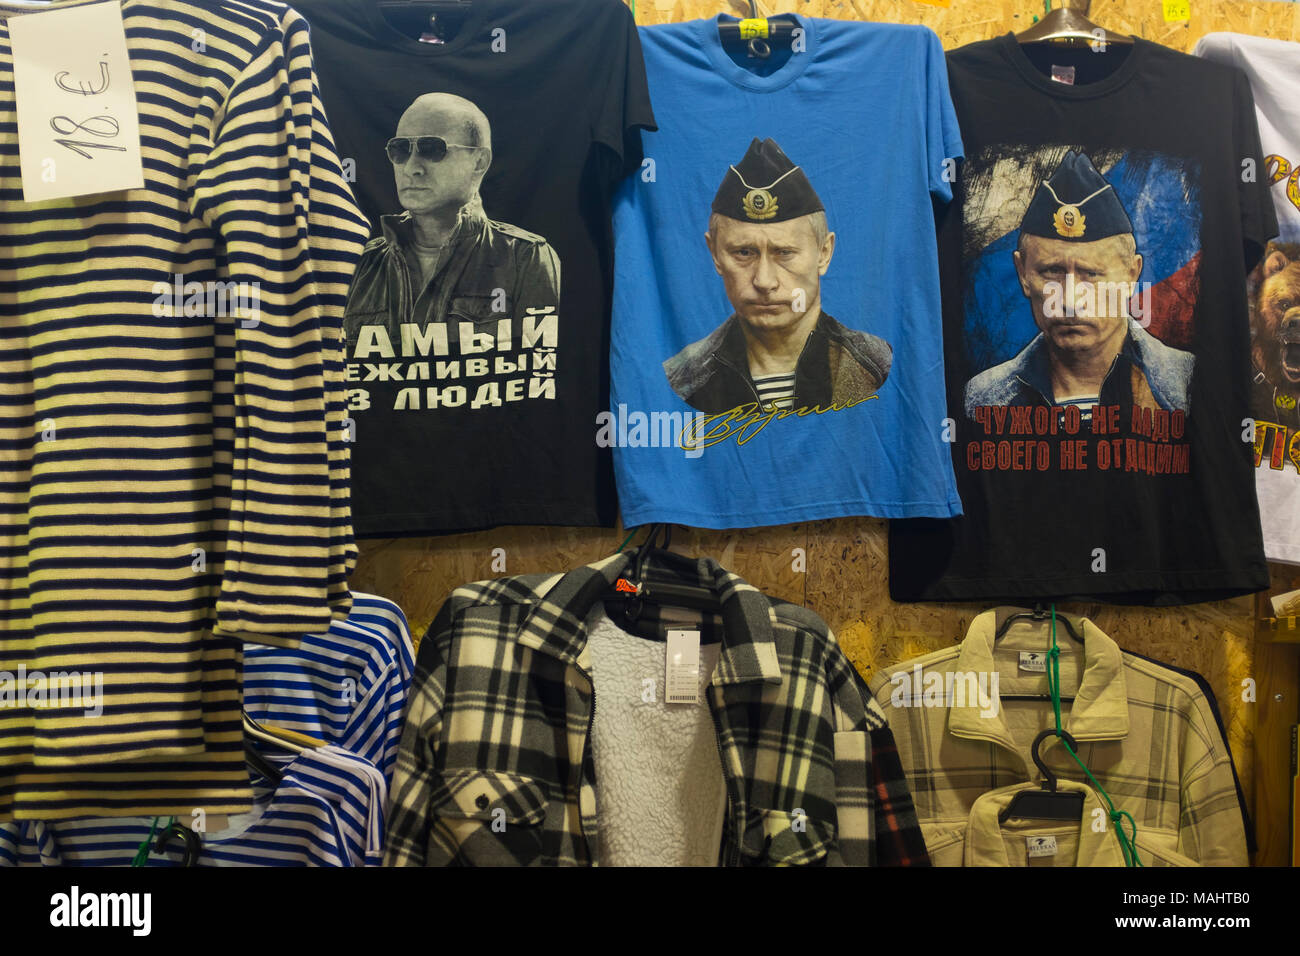 Ongepast Promotie betaling Pro Vladimir Putin tee shirts for sale at the Russian Market in nEstonia's  capital city, Tallinn Stock Photo - Alamy